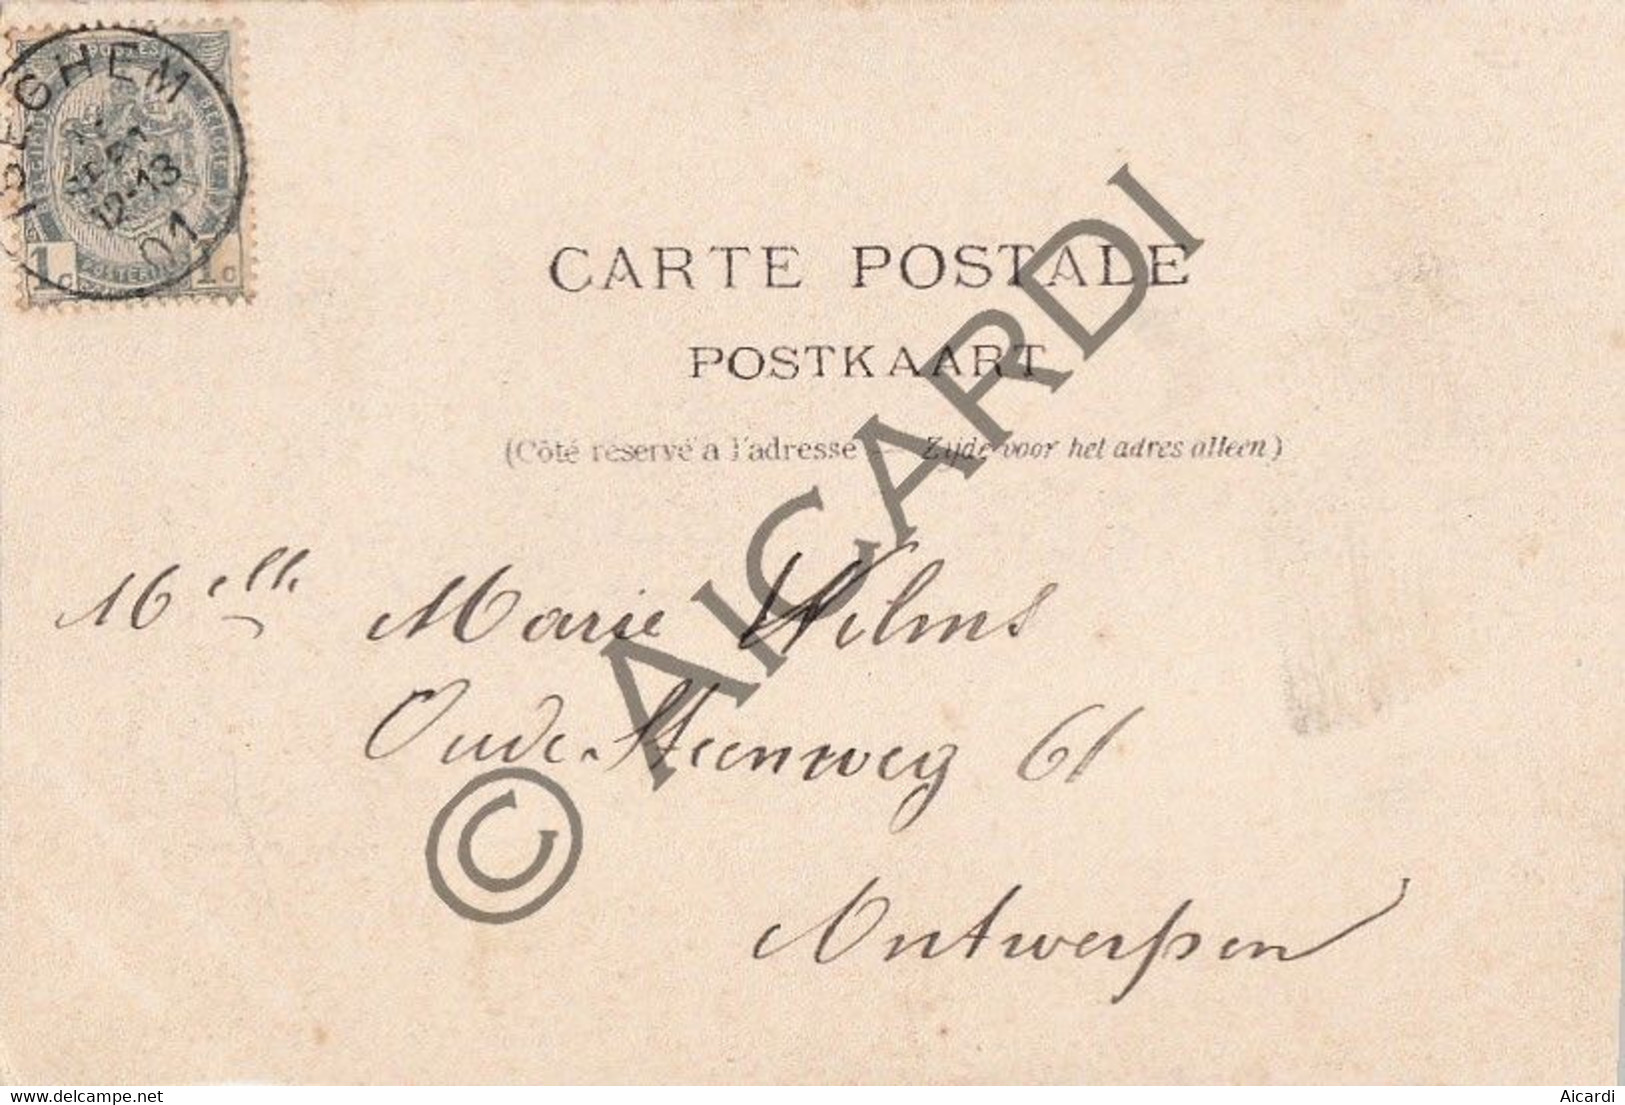 Carte Postale/Postkaart - IZEGEM - Eglise Et Rue St-Hilon (M. Wilms, Antwerpen, 1901) (A389) - Izegem